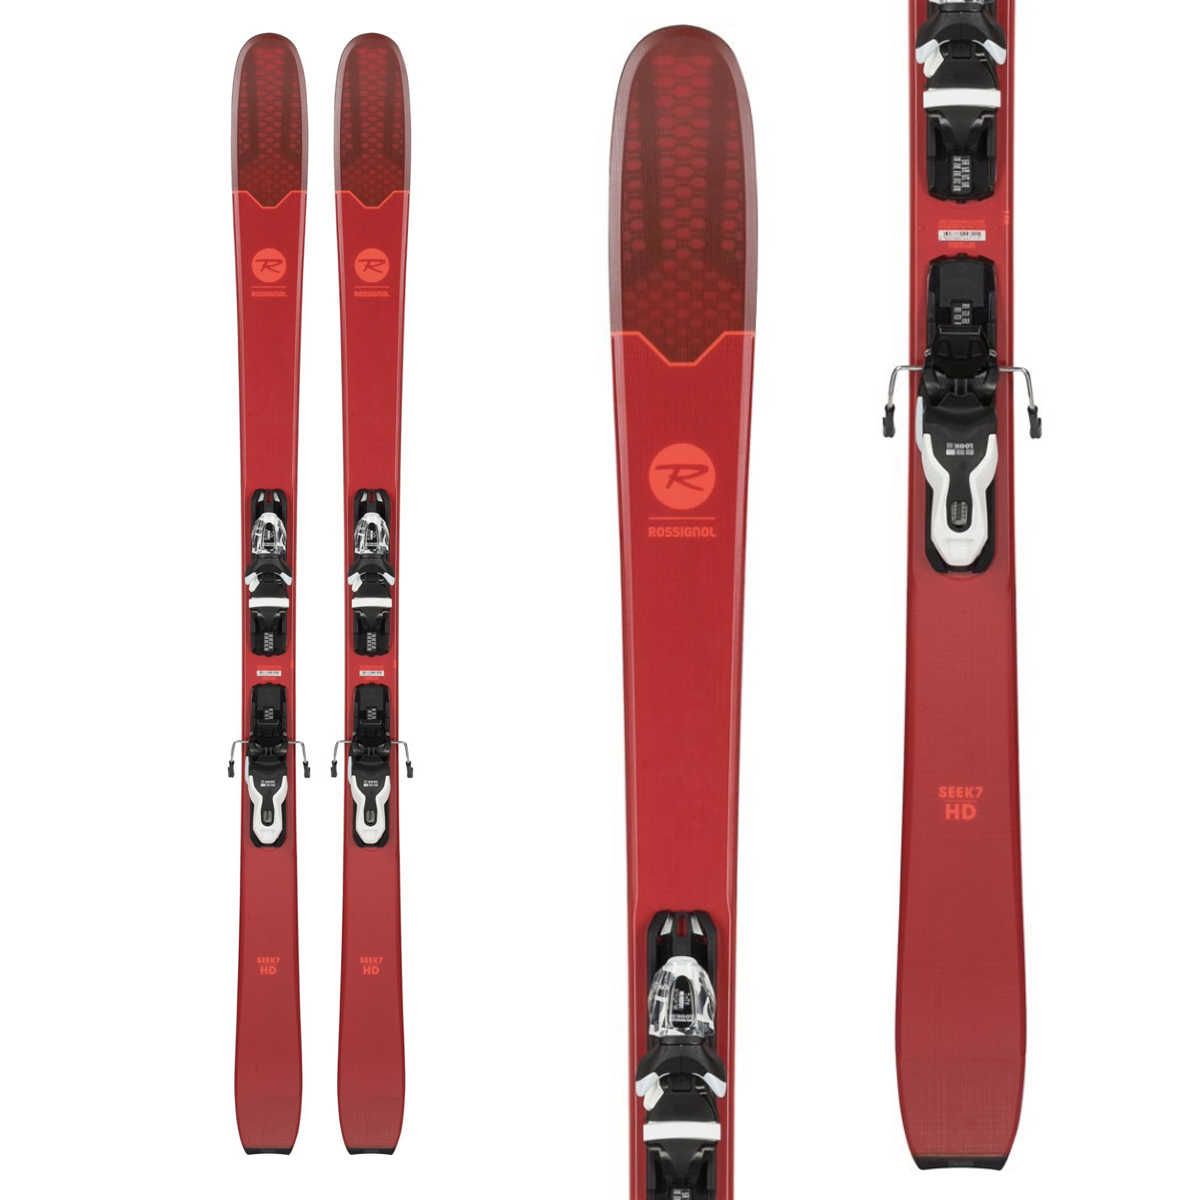 Pack ski SEEK 7 HD XP2 + XP 11 B93 BK/WHT 2019 